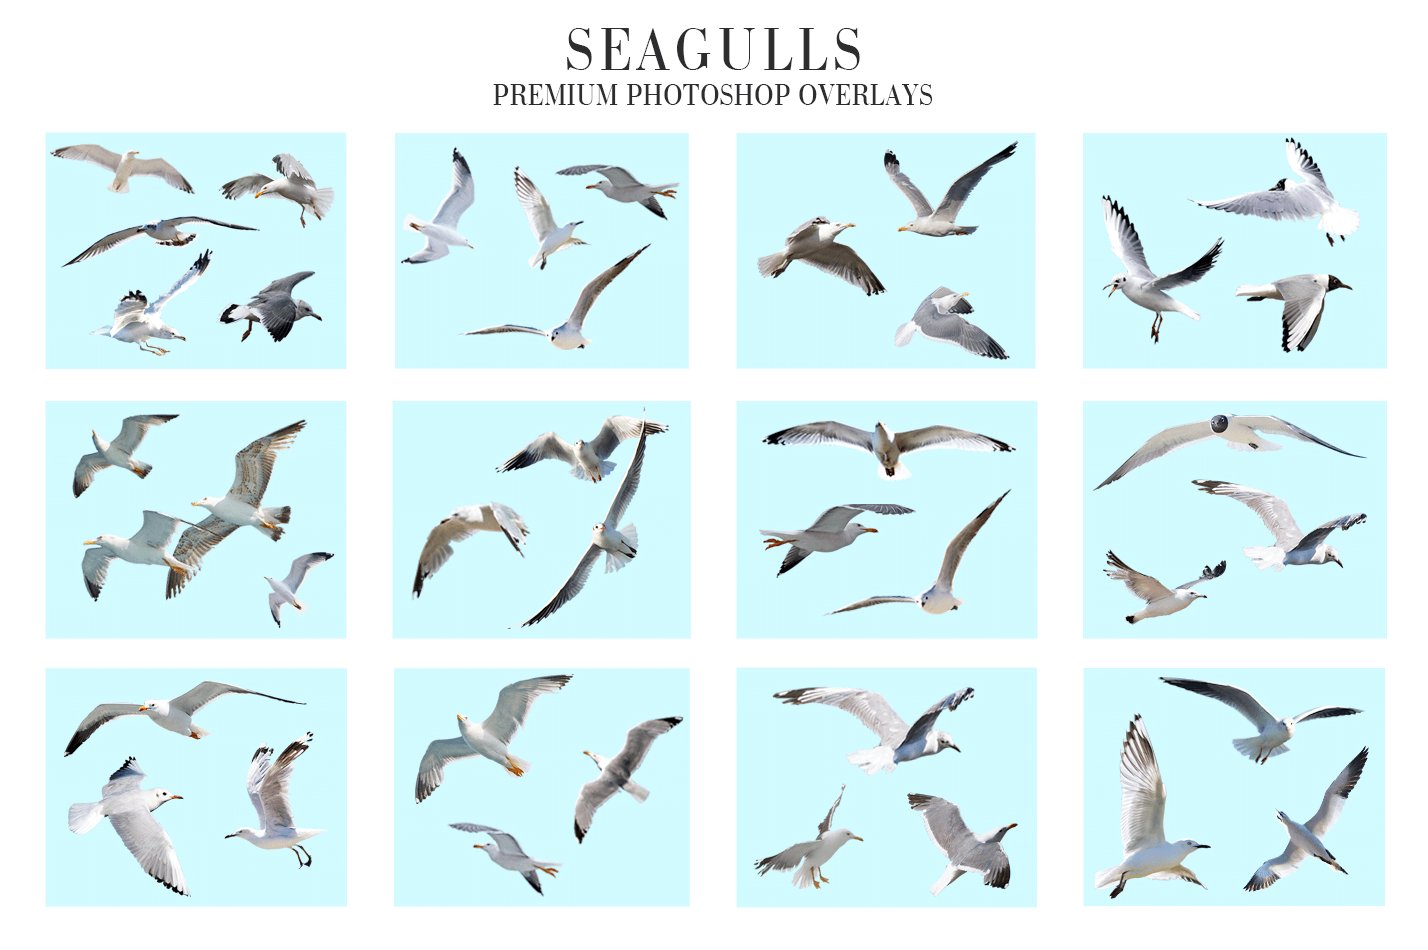 Seagulls Overlays Photoshoppreview image.